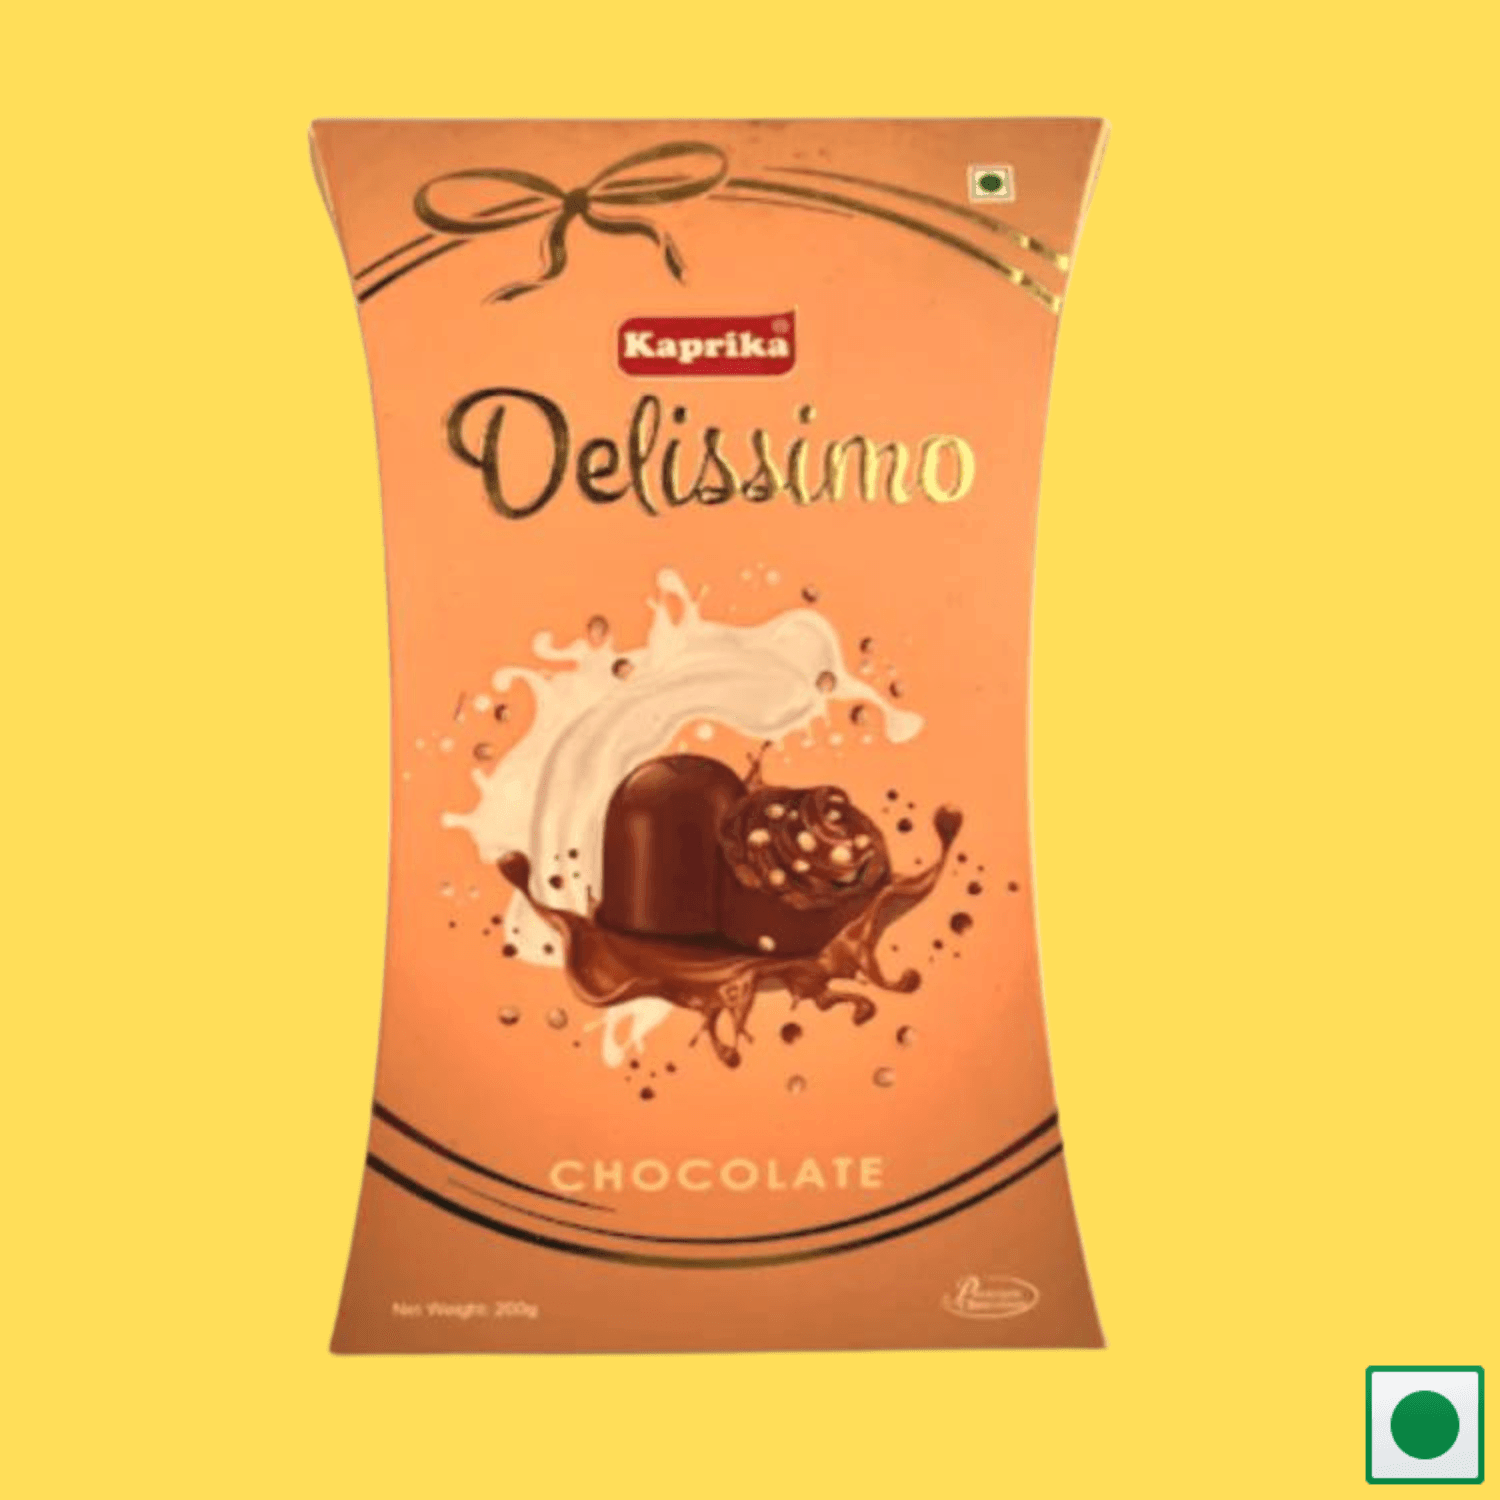 Kaprika Delissimo Premium Chocolate with Almond Crumbs, 200g - Super 7 Mart